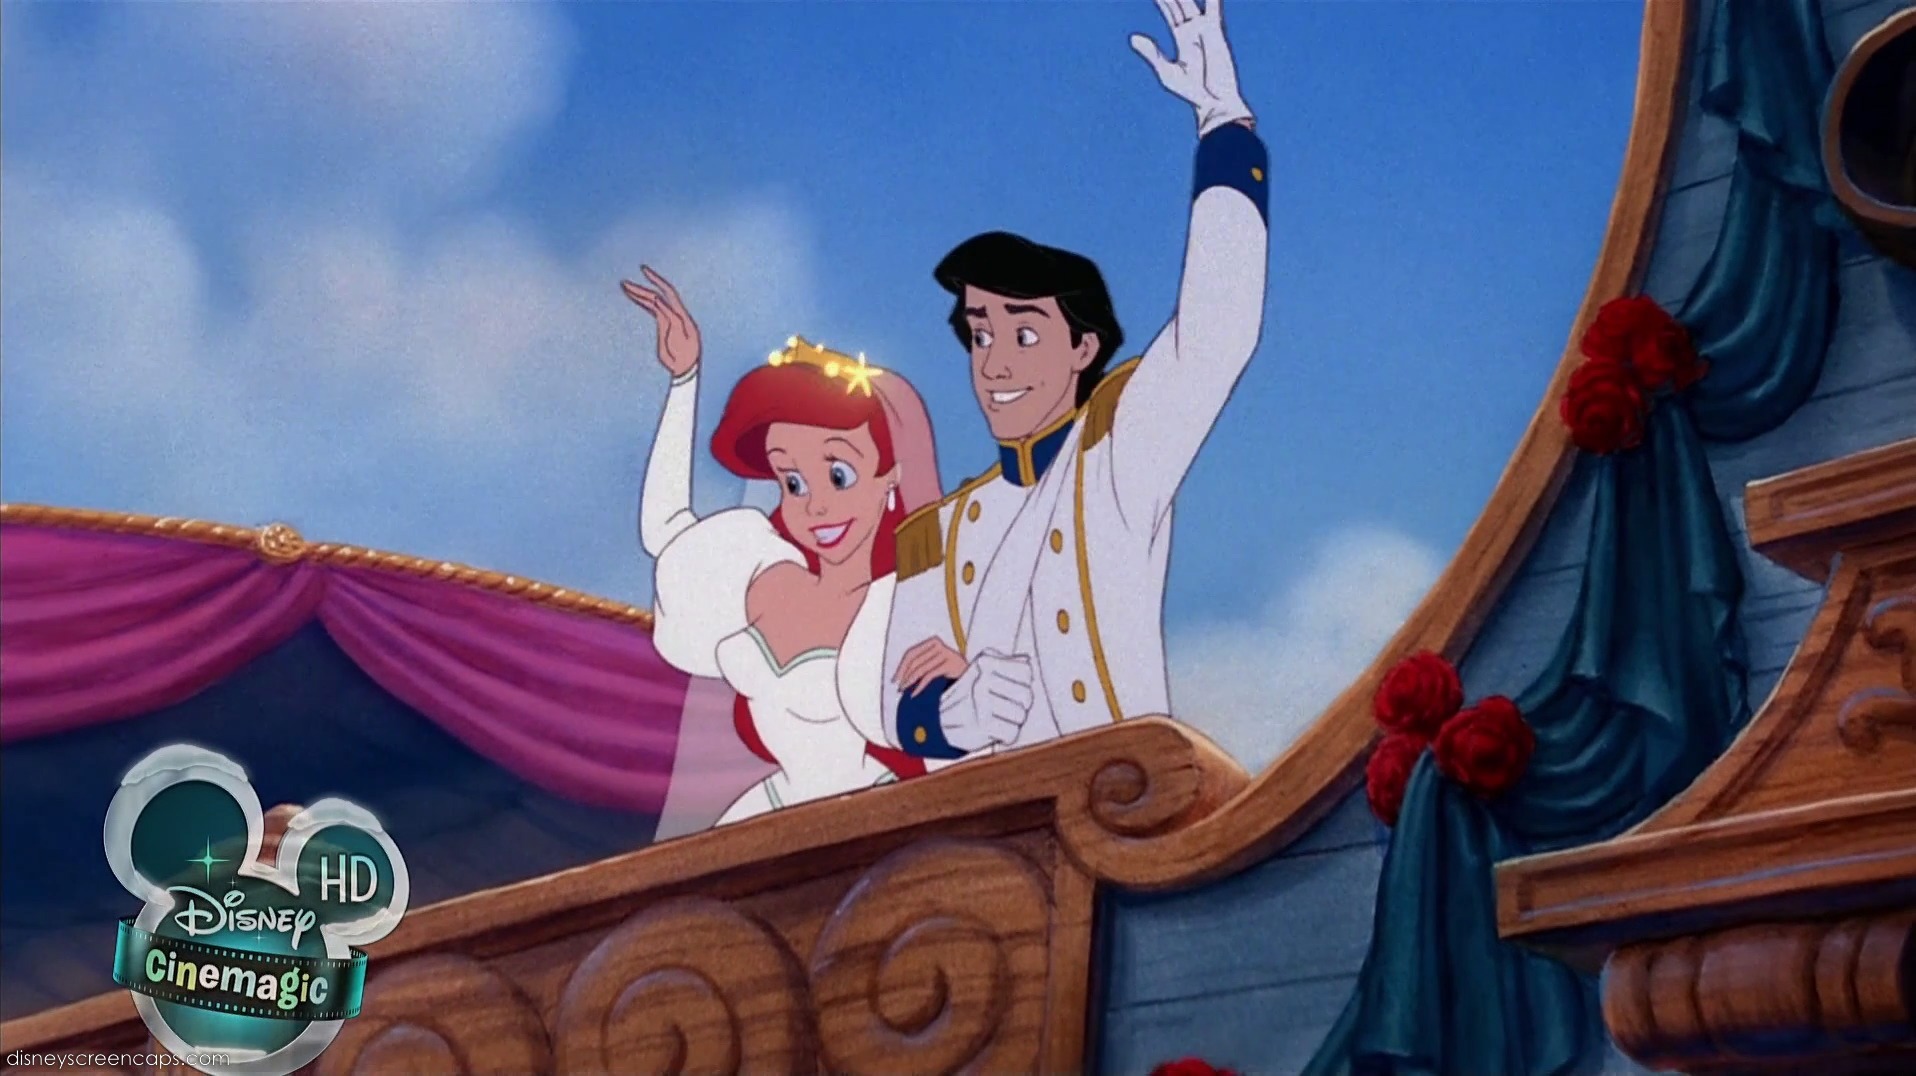 Favorite Wedding Scene? Poll Results - Disney Princess - Fanpop